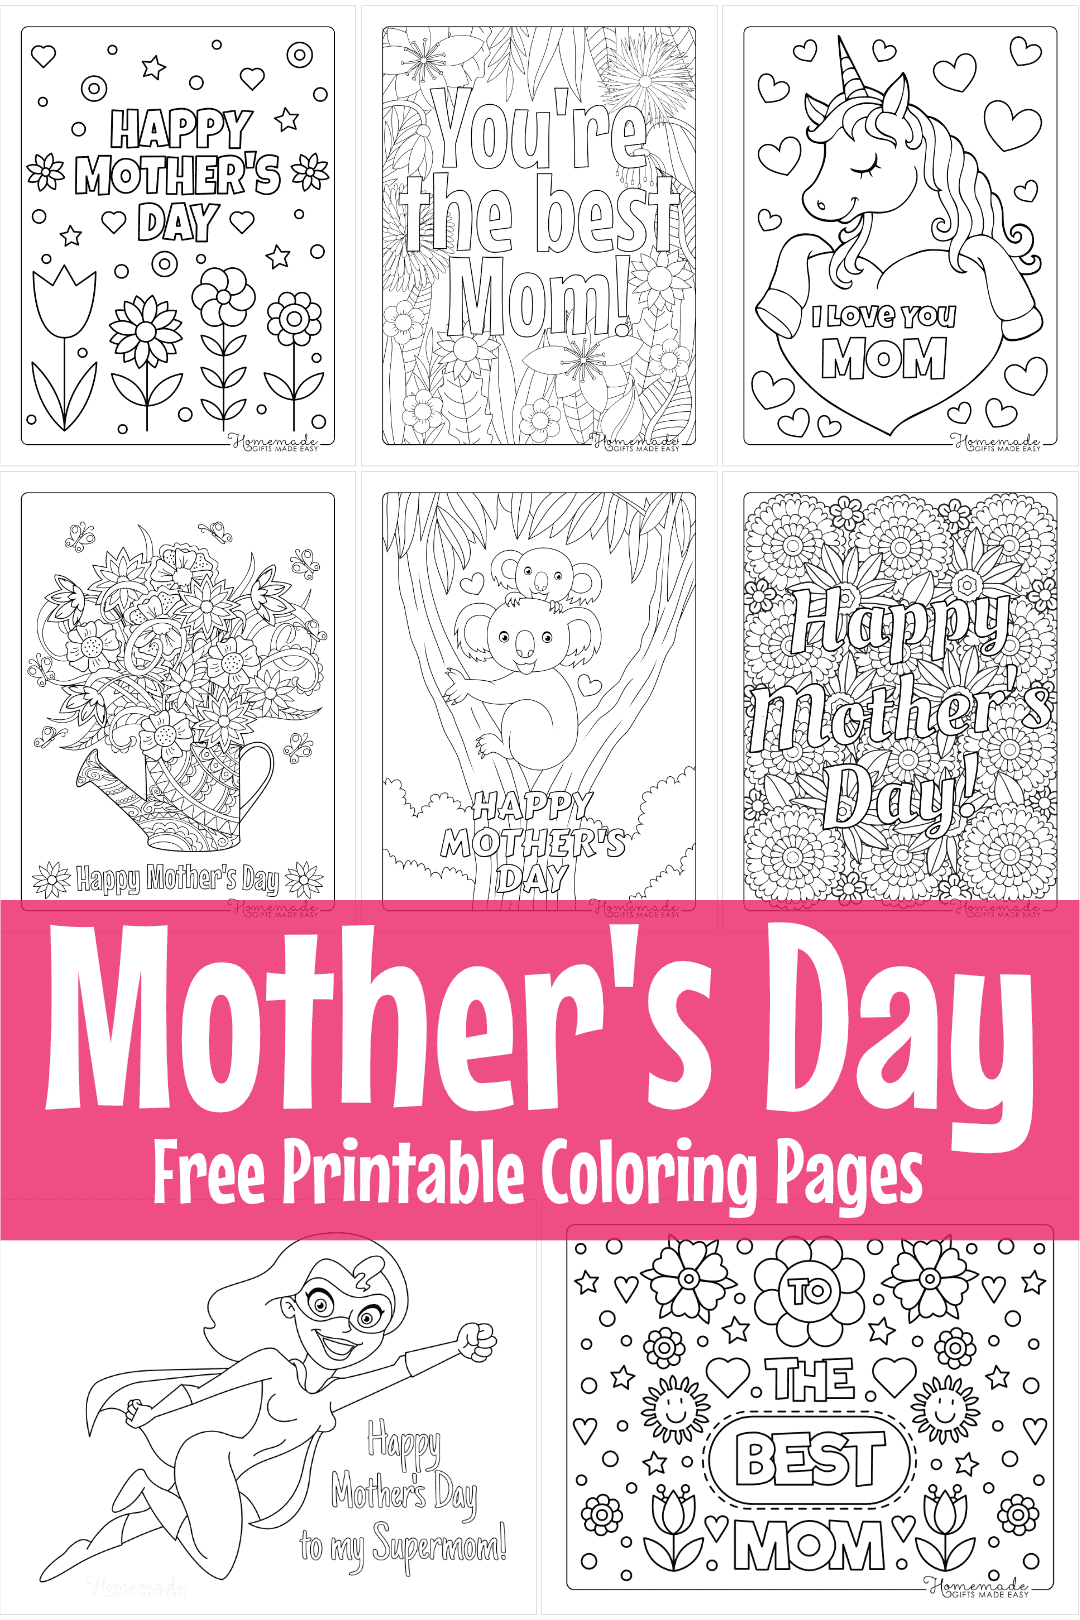 Holiday Gift Ideas PinWire: regalos del día de la madre joyería  #HomemadeGiftsForDad - Pinterest 8 mins a… | Mother's day diy, Diy gifts  for mom, Diy birthday gifts